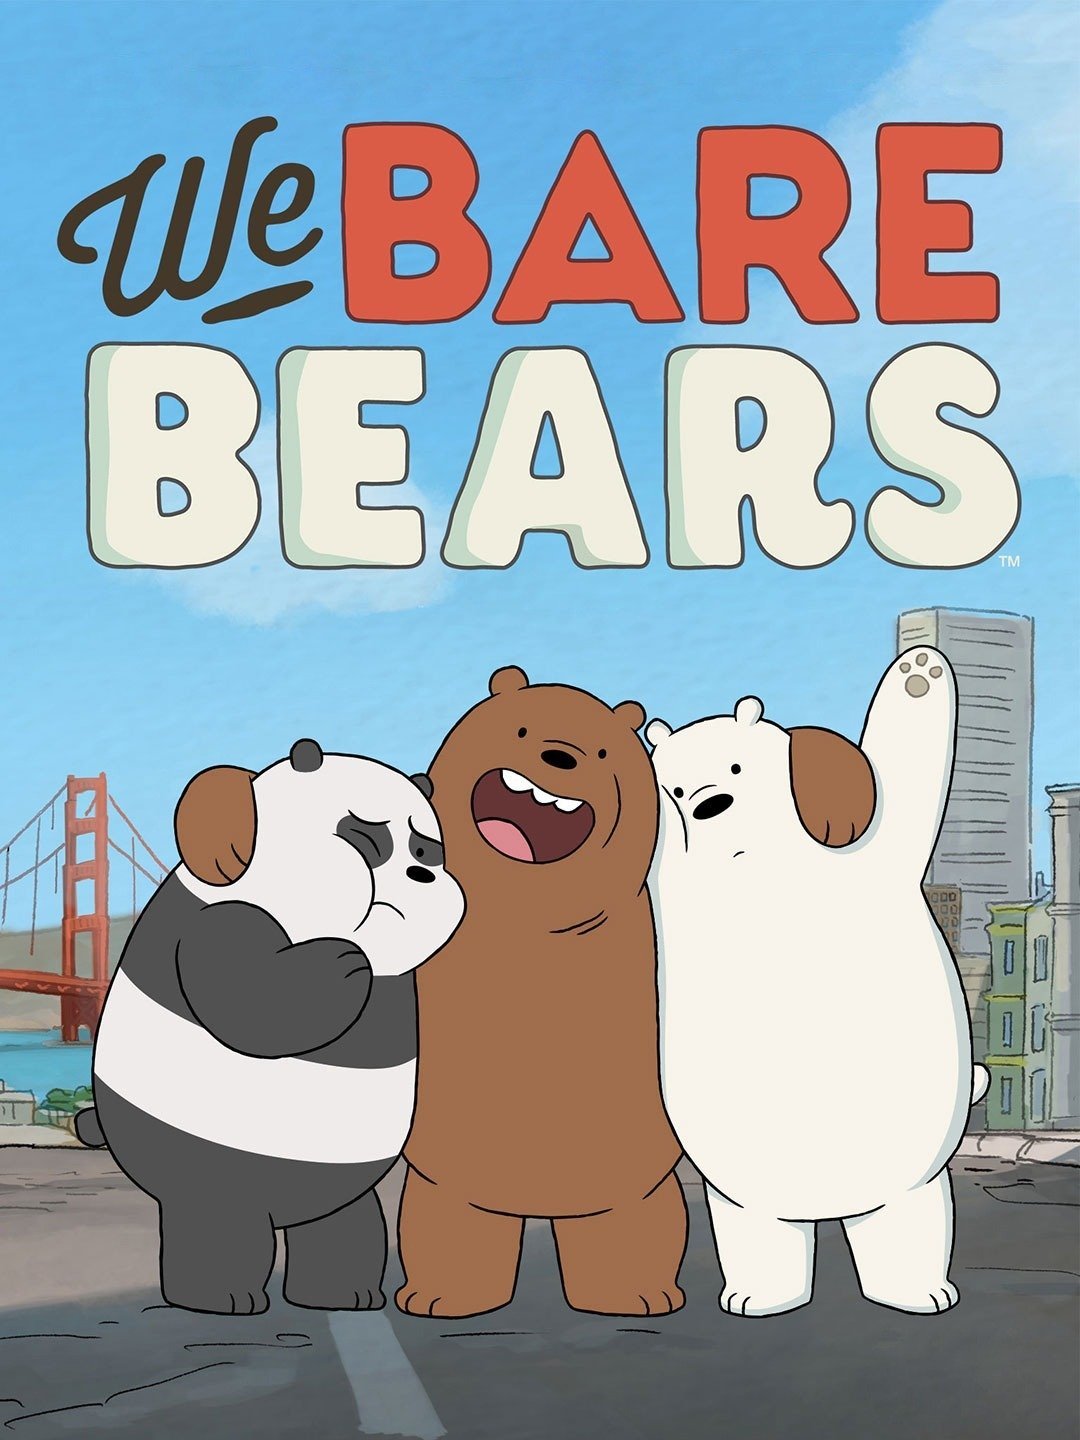 The Bears' Reality TV Show, We Bare Bears